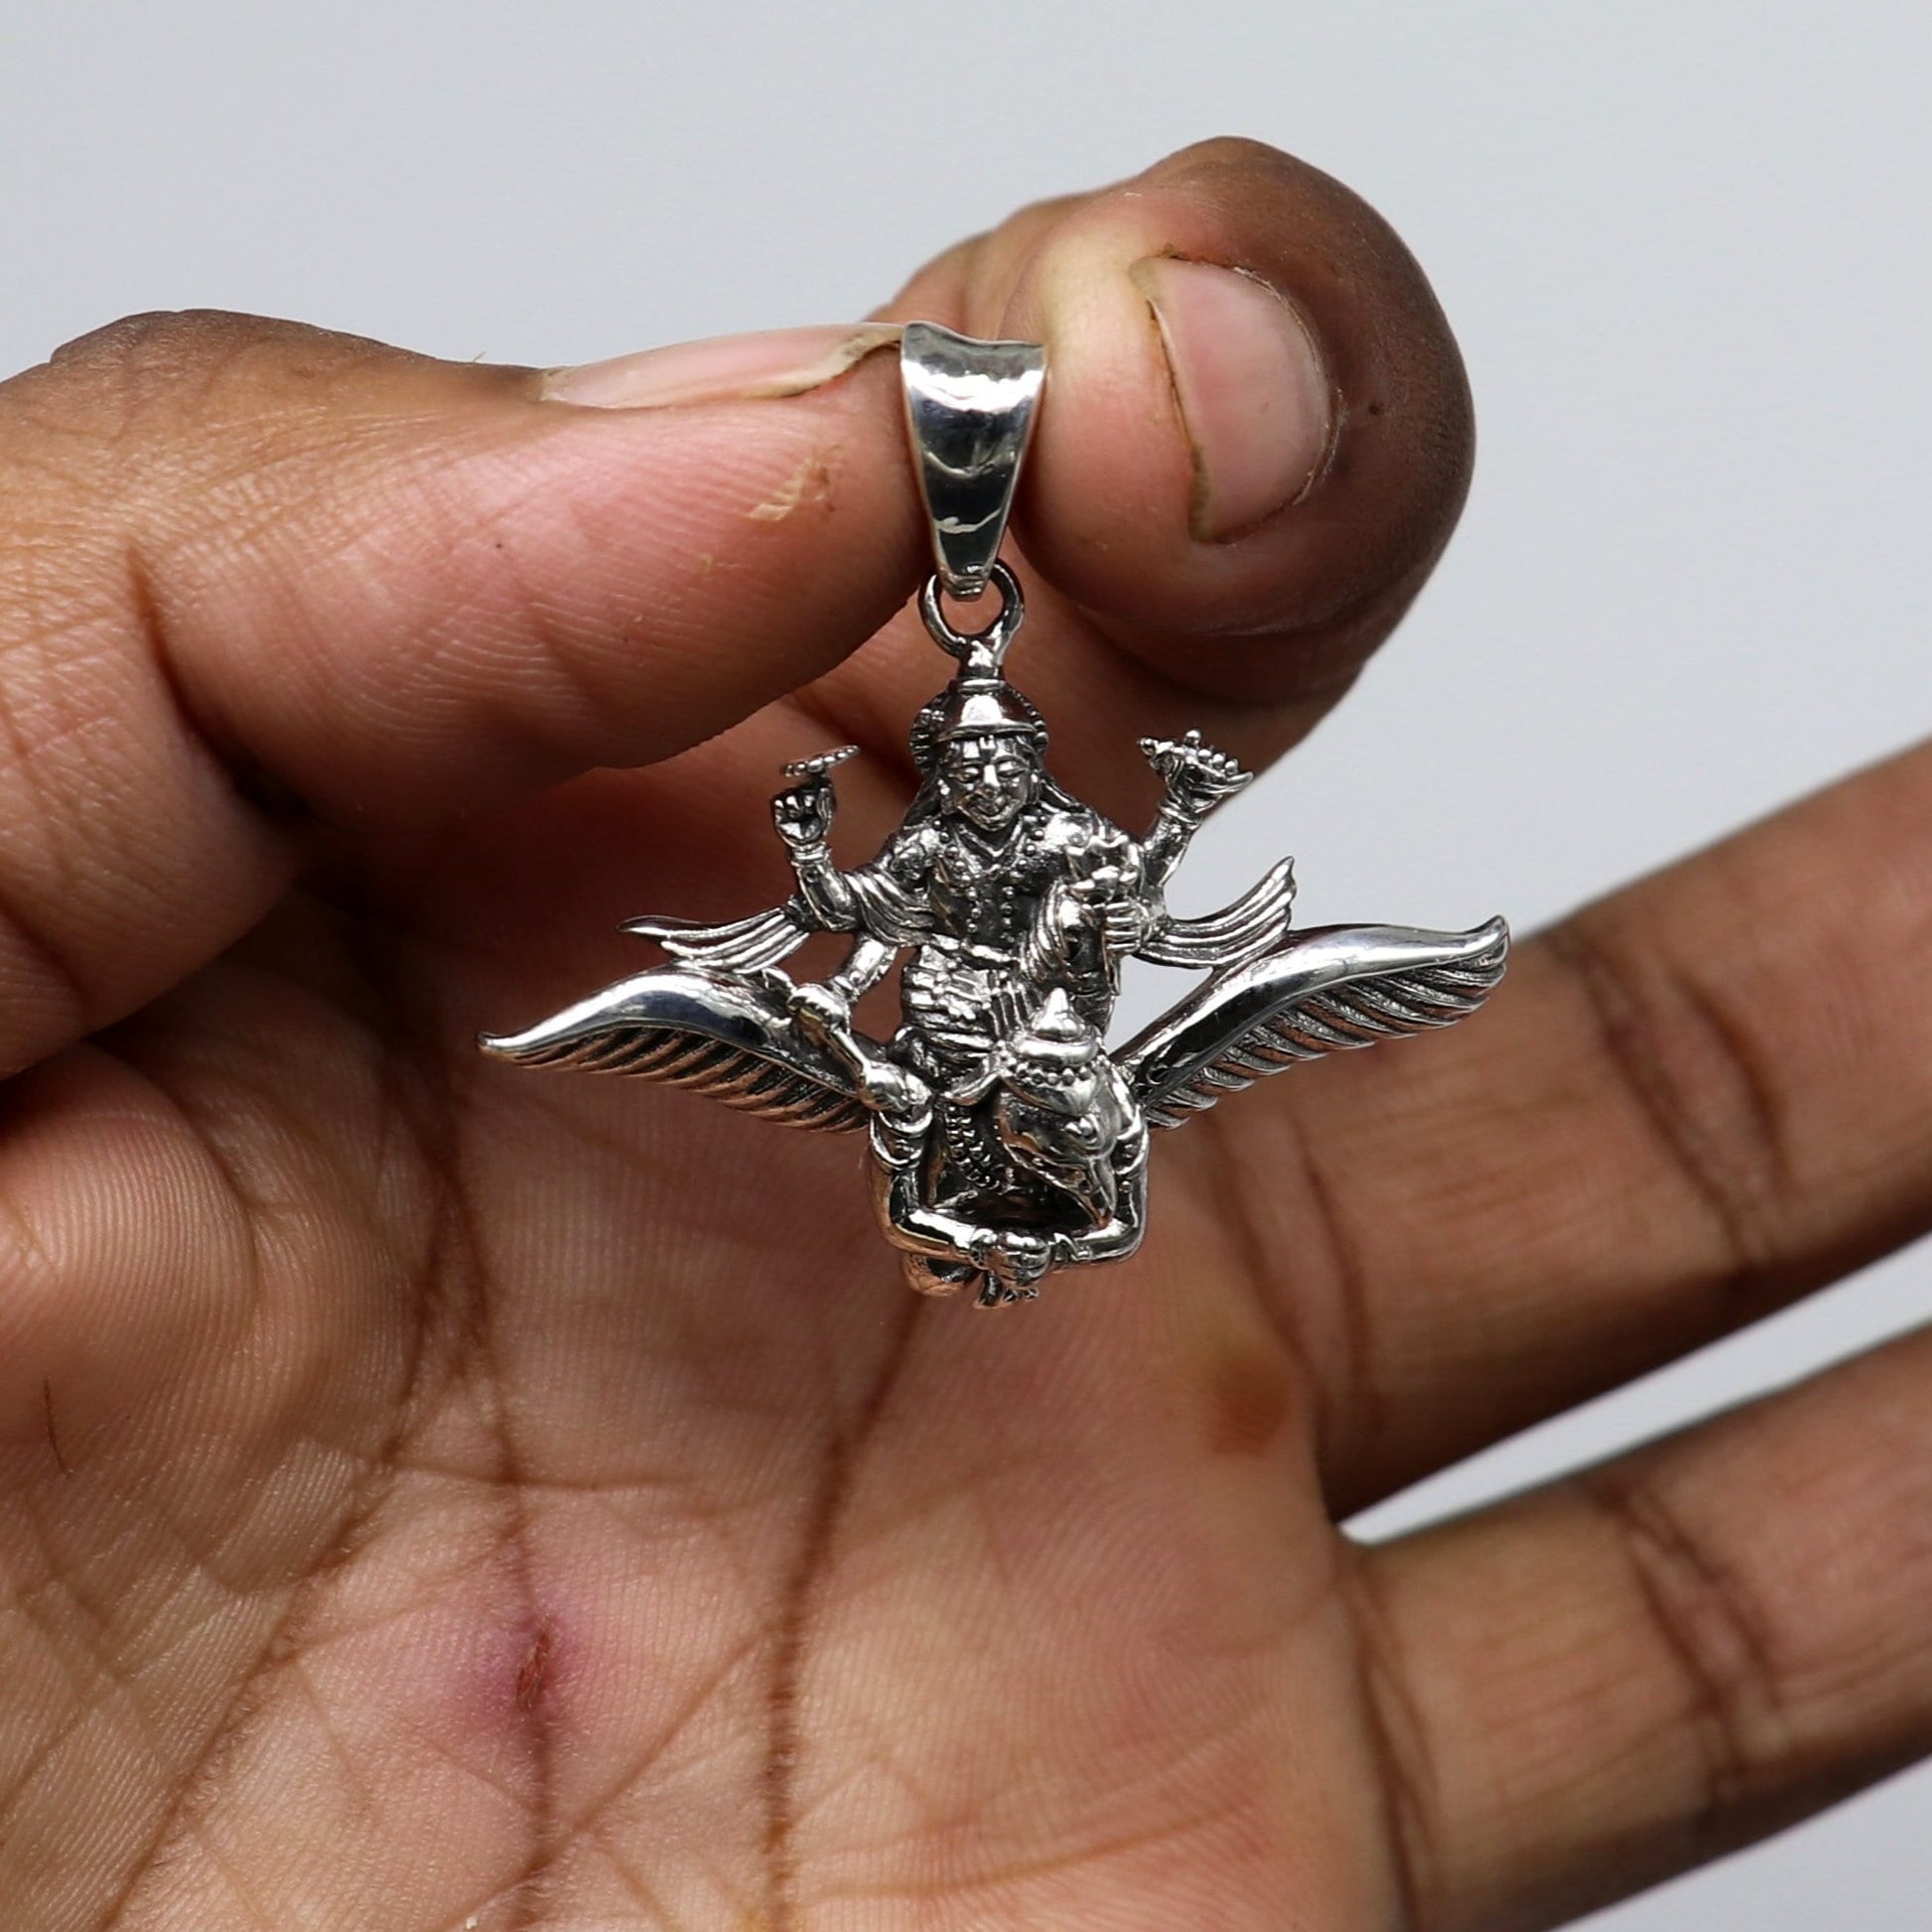 925 sterling silver Hindu idol Lord Vishnu with Garuda pendant, excellent stunning unisex locket pendant customized divine jewelry ssp516 - TRIBAL ORNAMENTS